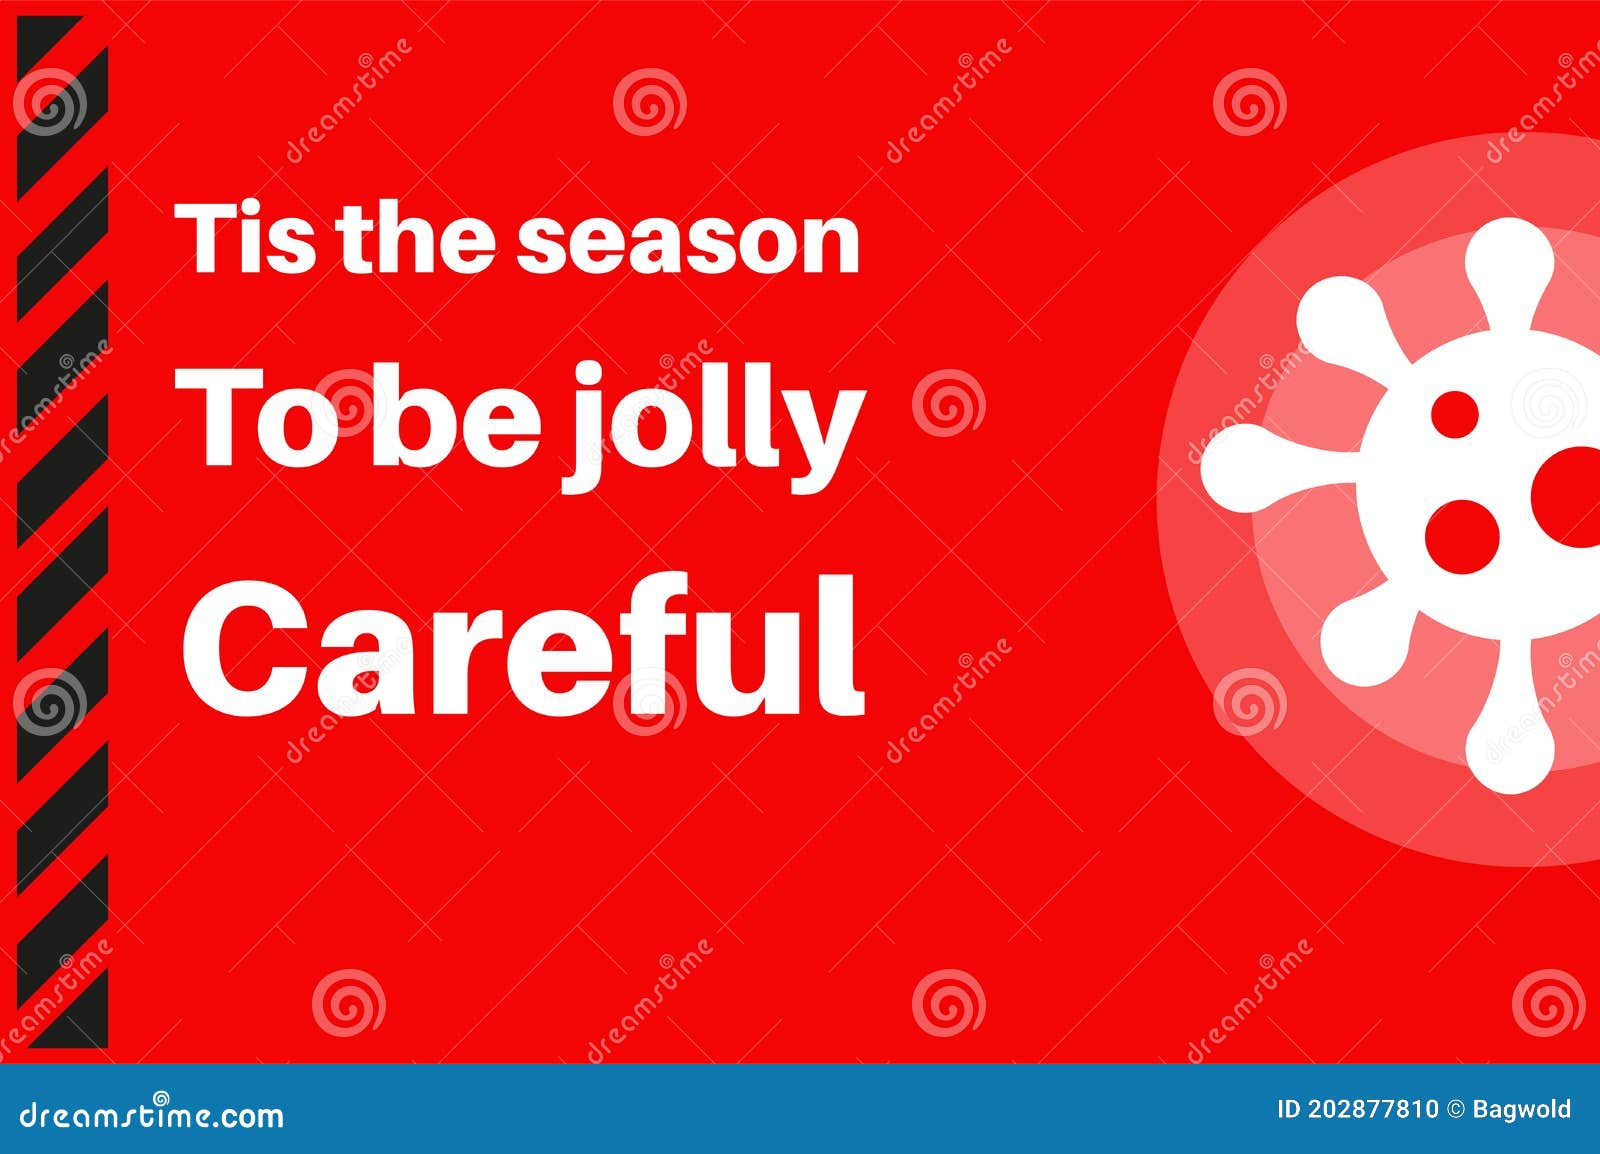 tis the season to be jolly careful   with virus logo